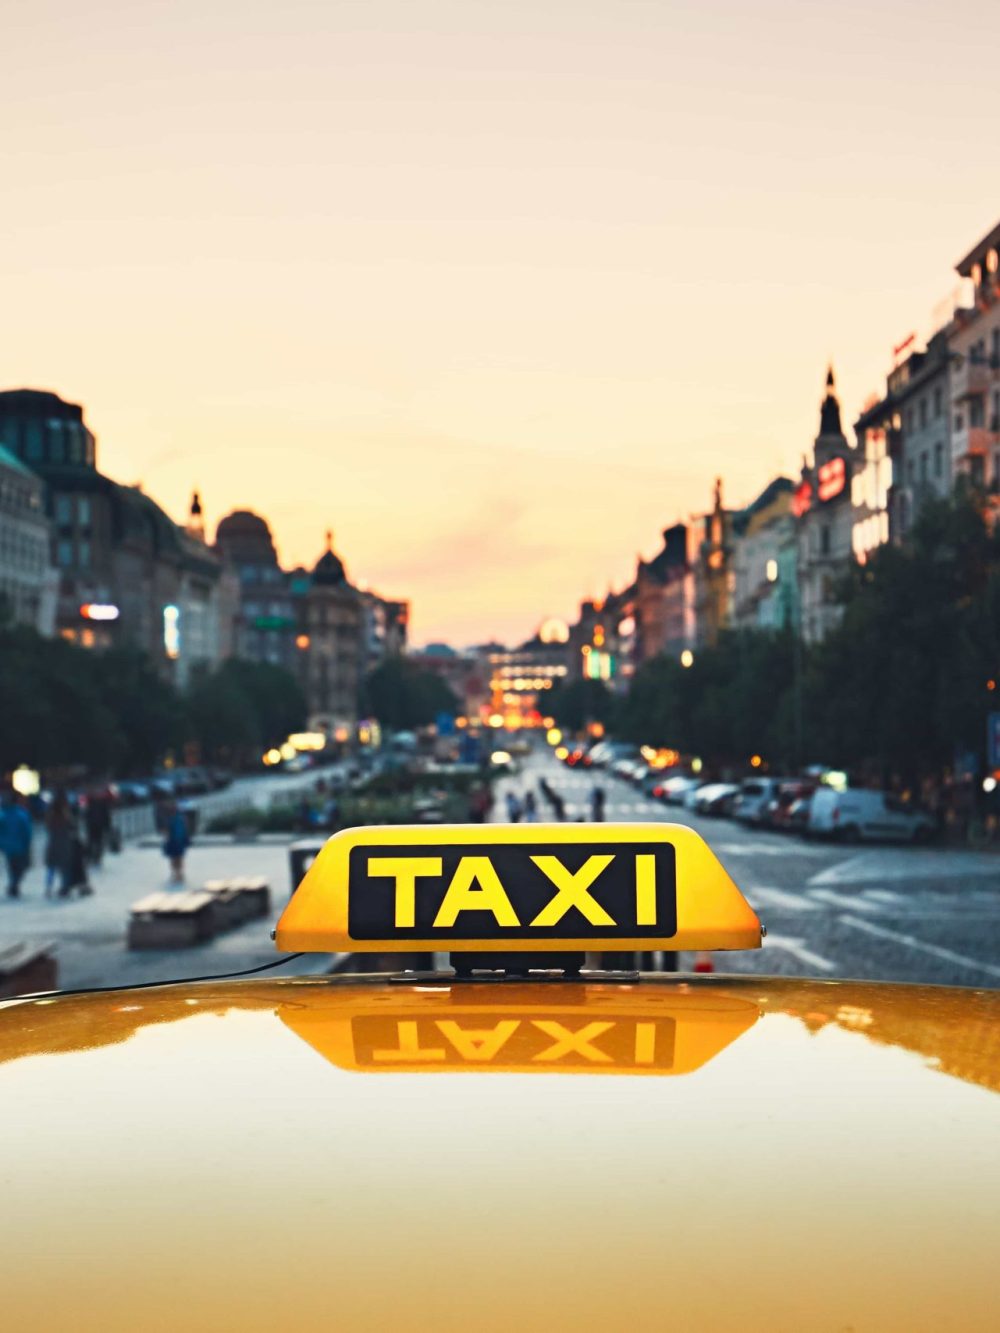 Taxi Latino Carxi taxi-car-on-the-city-street